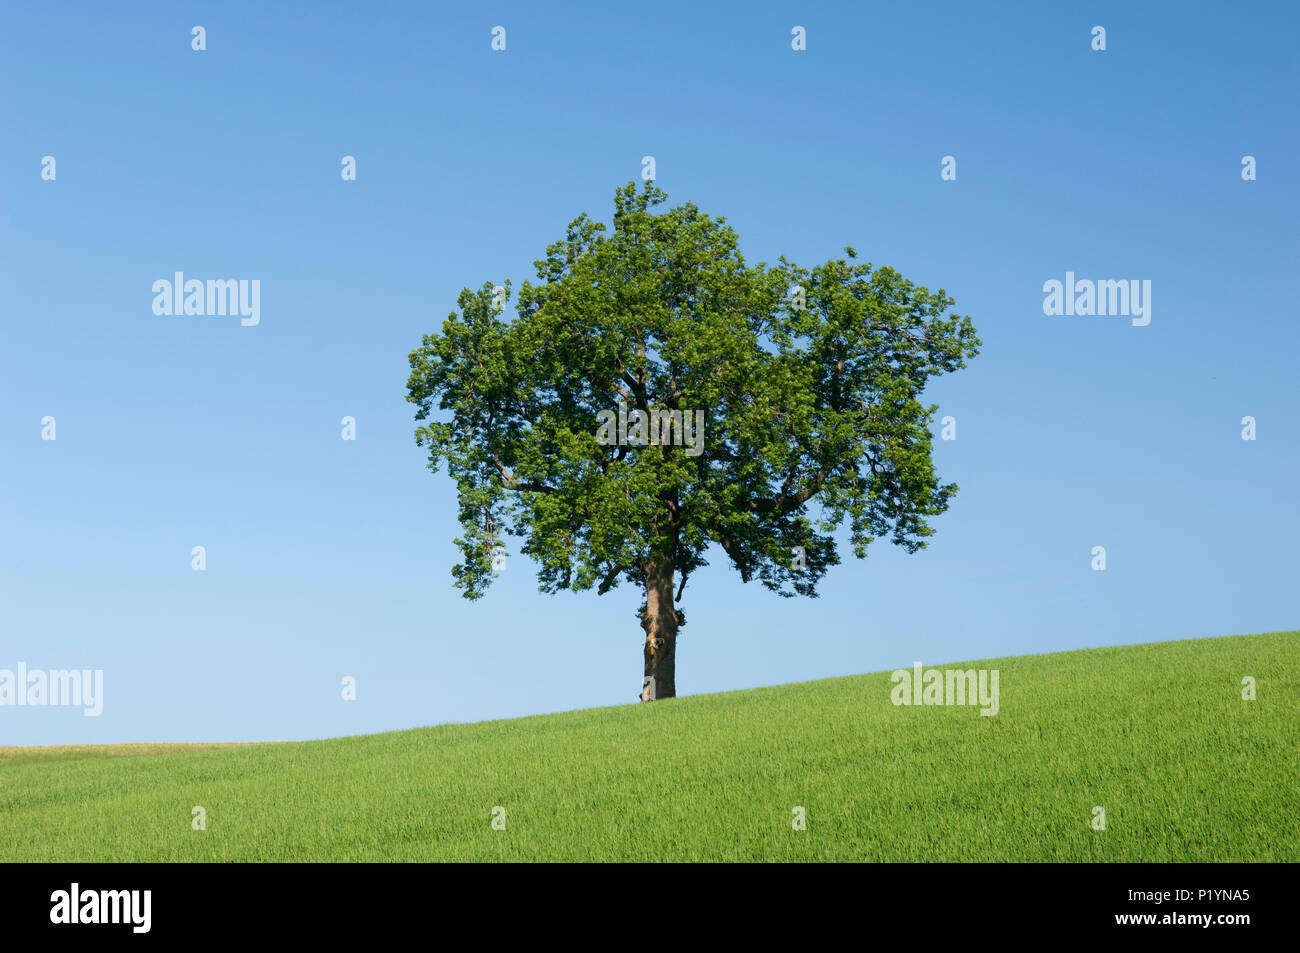 Single tree in green field, against a clear blue sky - Scotland, UK. Stock Photo